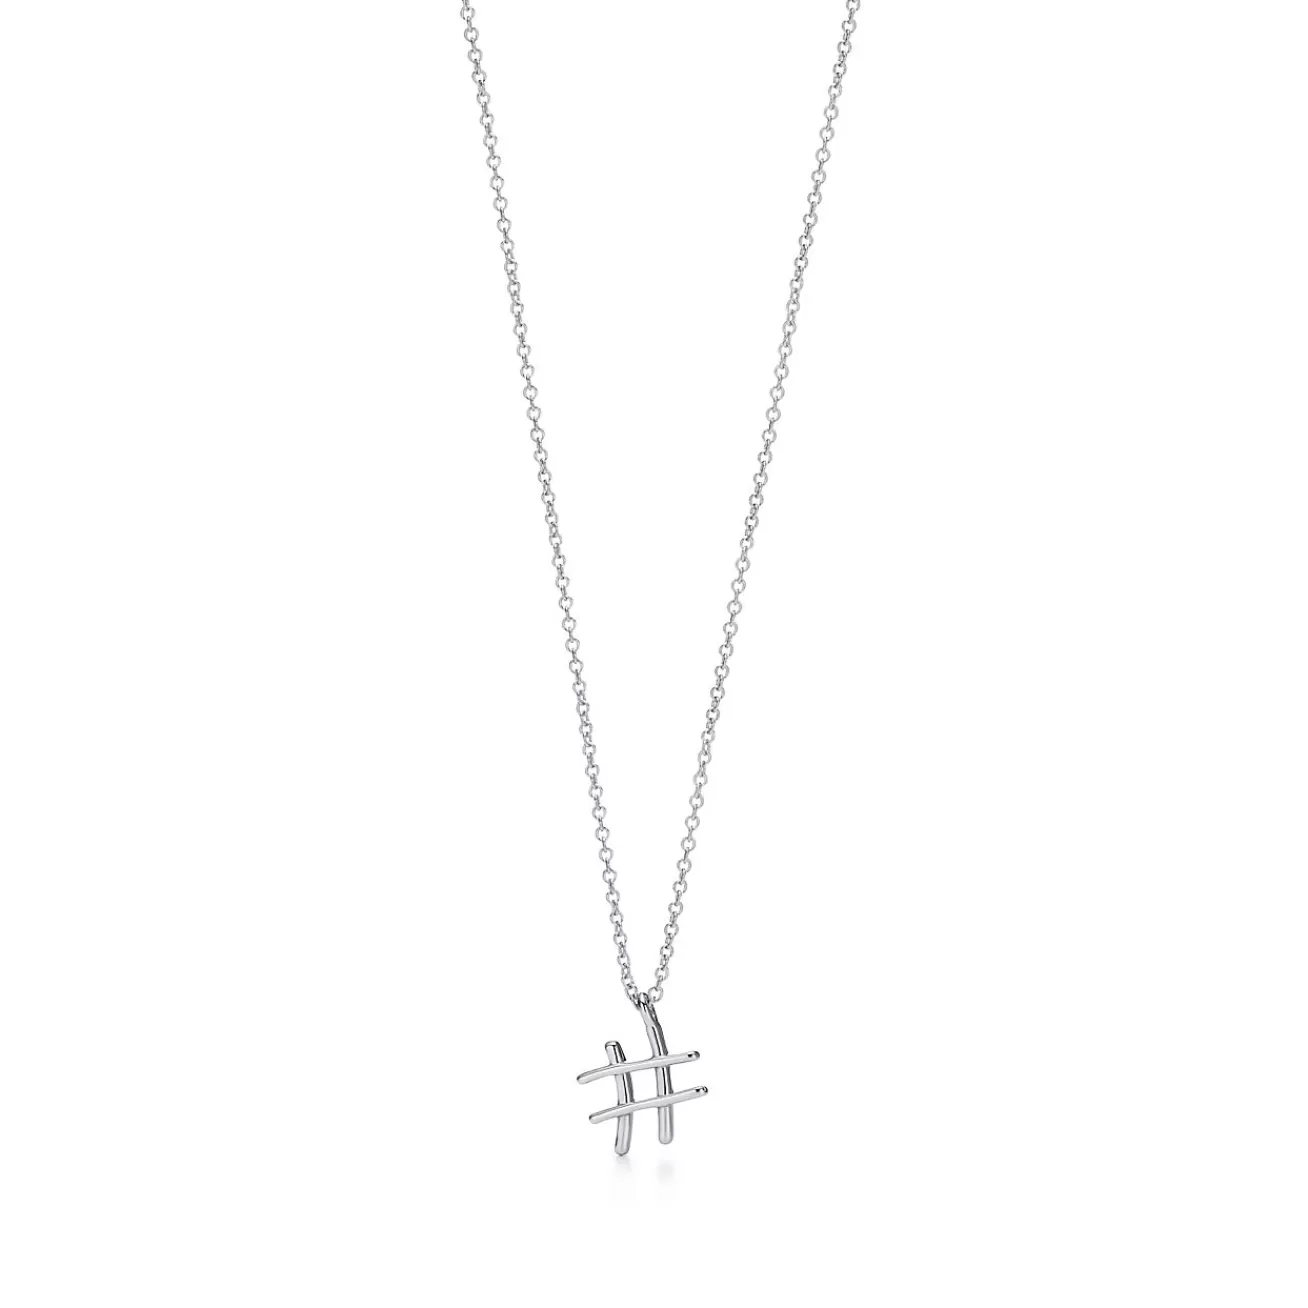 Tiffany & Co. Paloma's Graffiti hashtag pendant in sterling silver, small. | ^ Necklaces & Pendants | Sterling Silver Jewelry